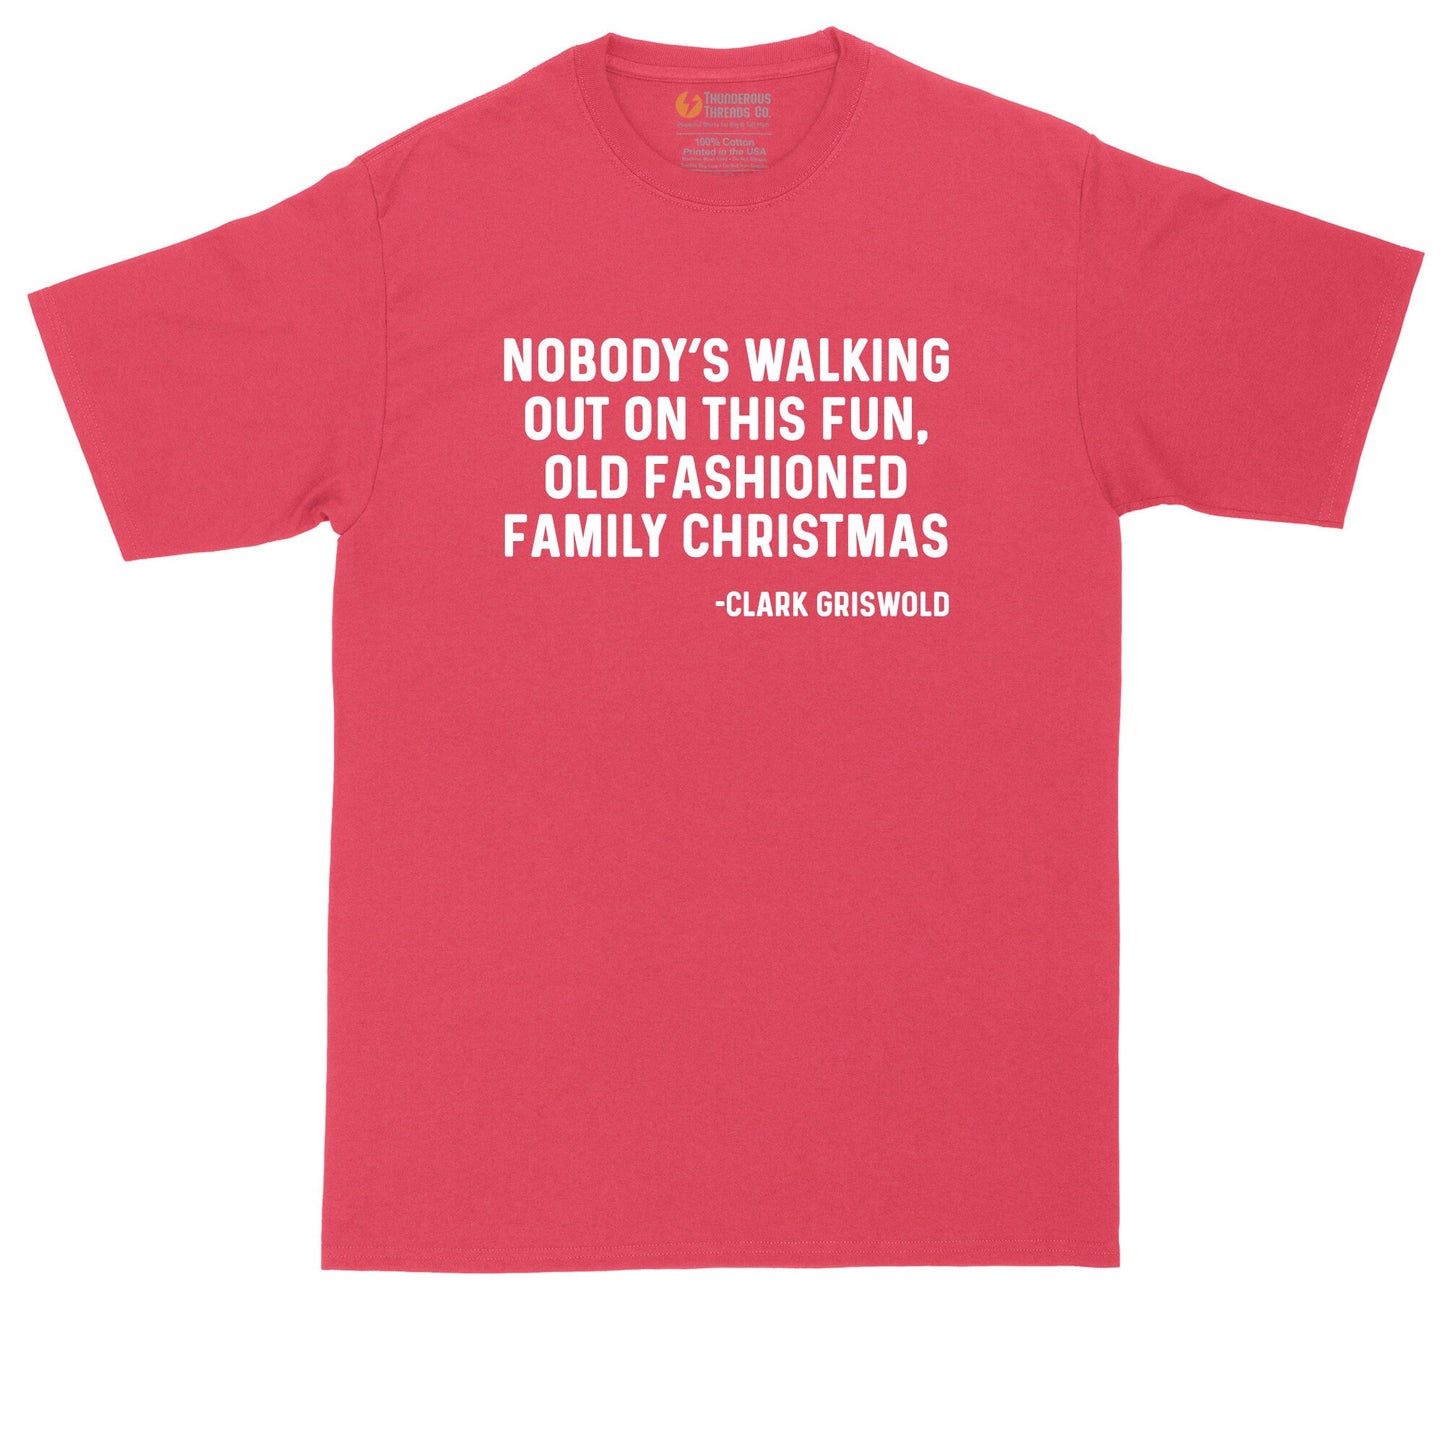 Nobody's Walking Out on the Fun Family Christmas | Mens Big & Tall T-Shirt | Funny Christmas Shirt | Christmas Gift Shirt | Fun Movie Quote